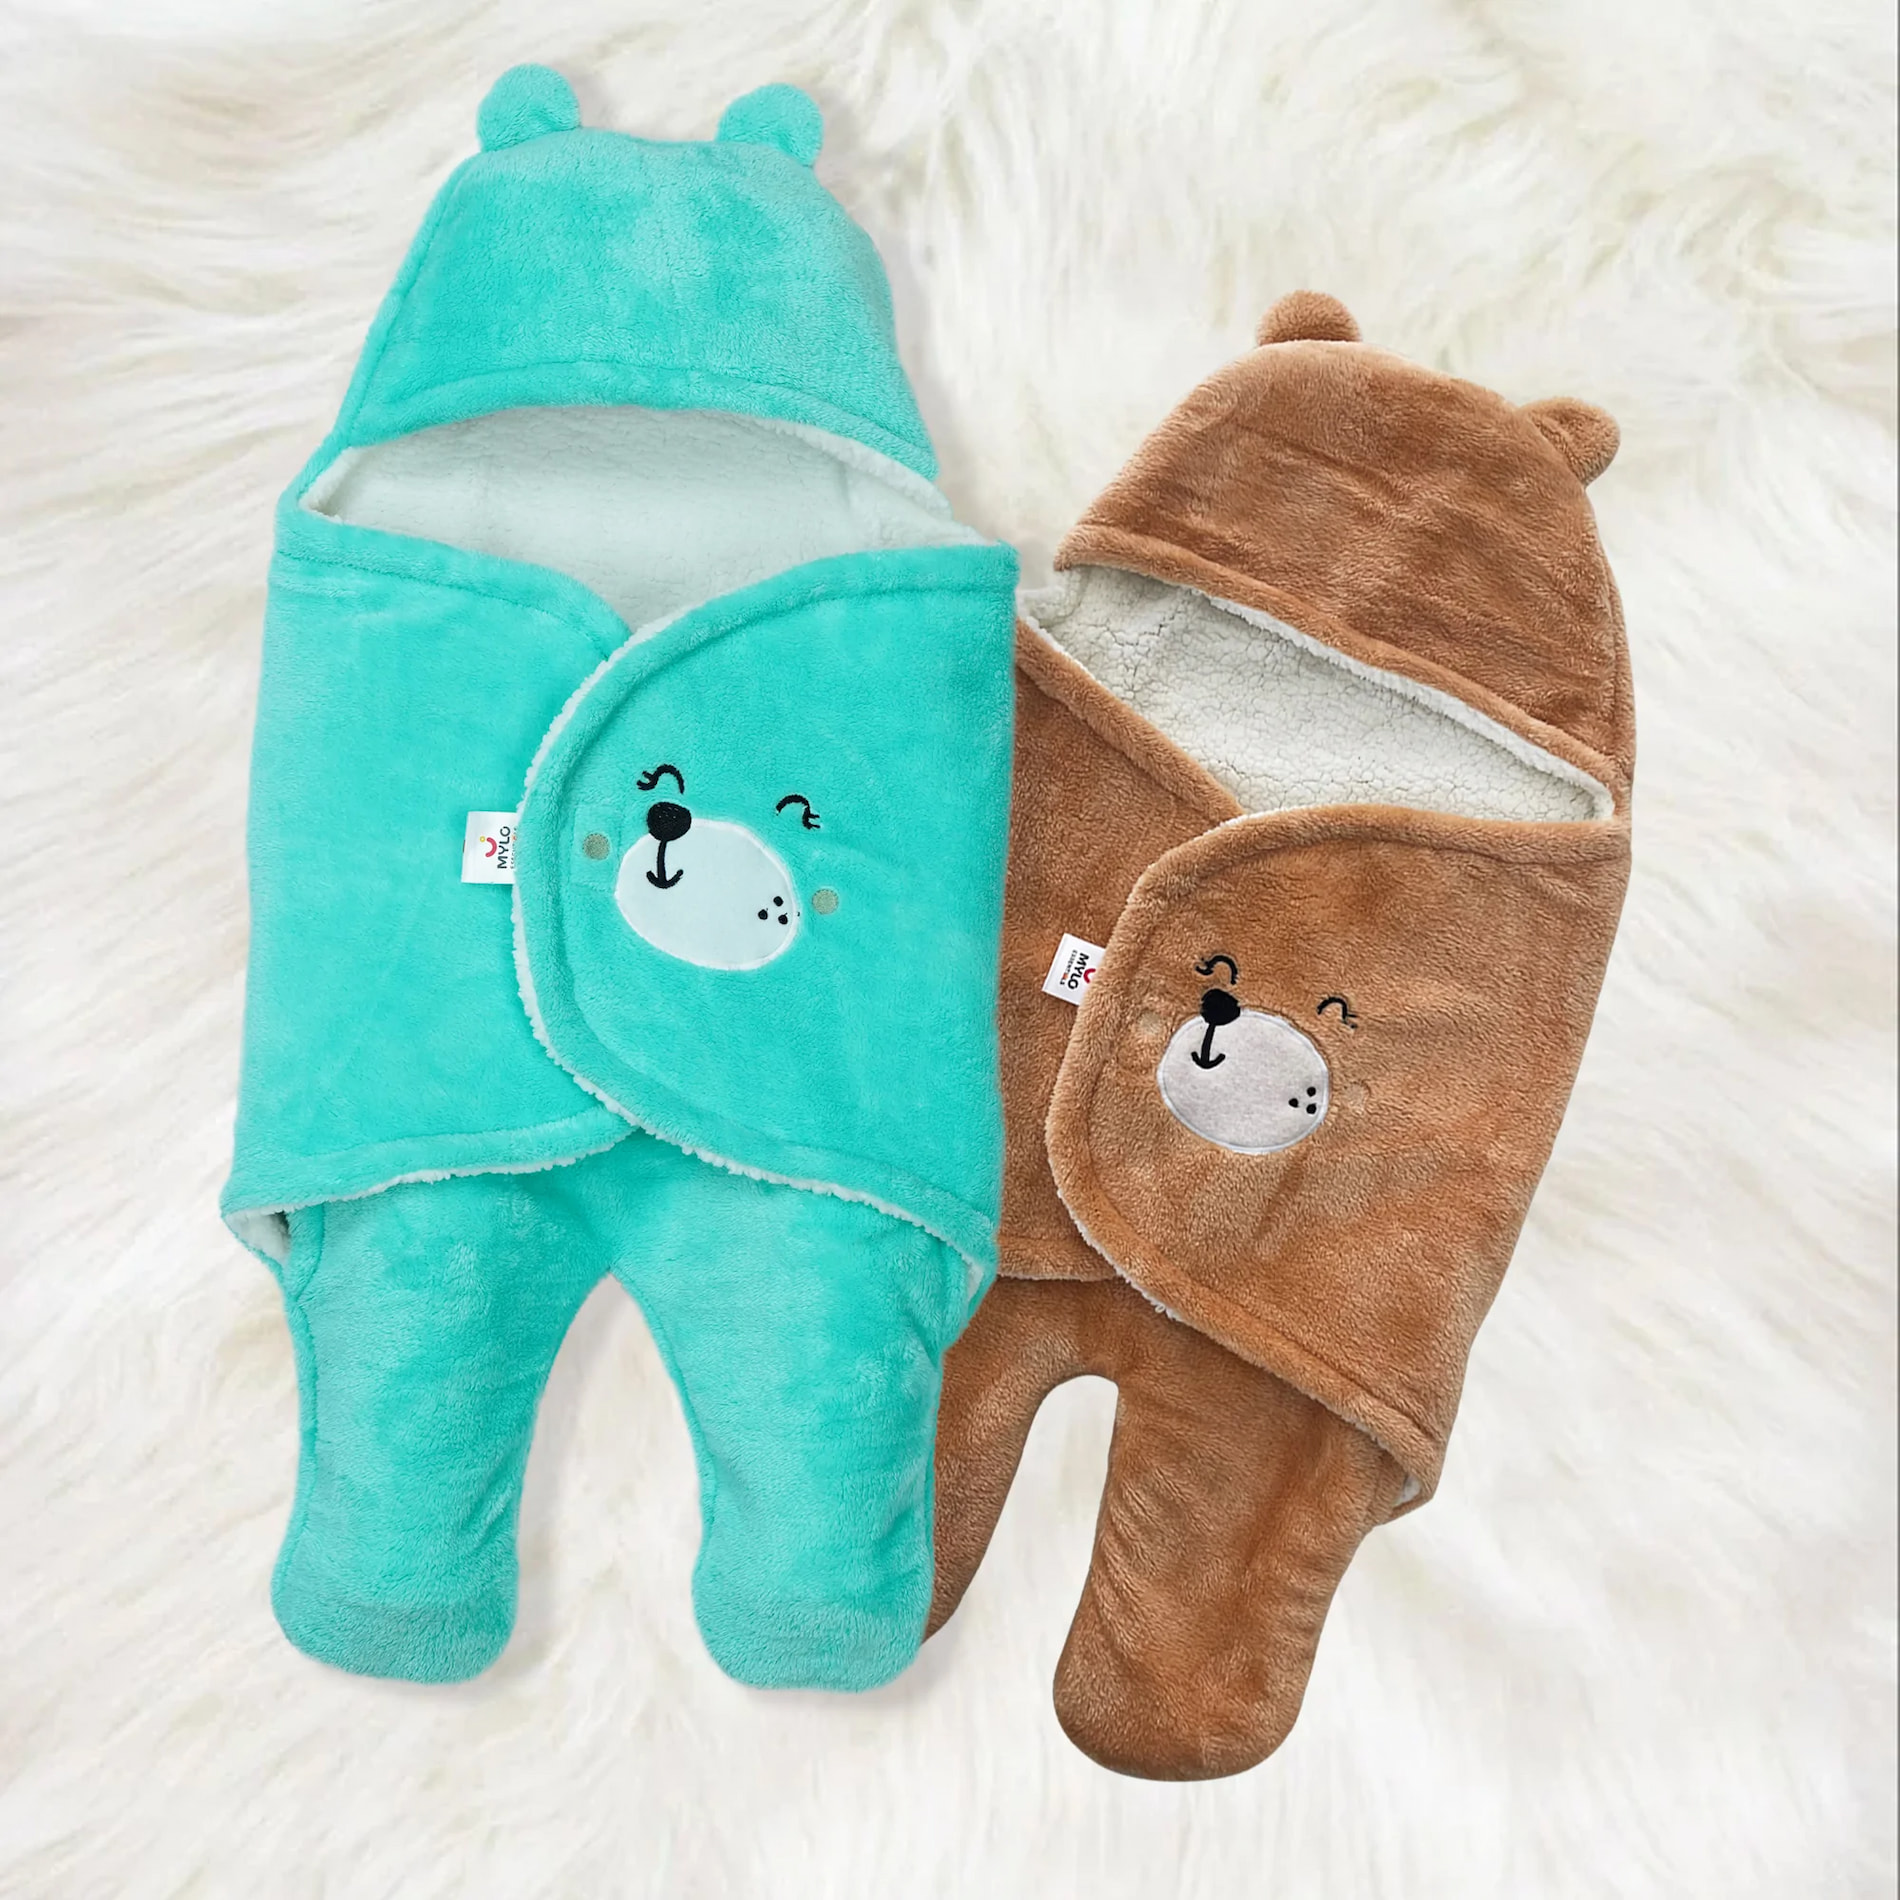 Mylo Ultra-soft Cute Baby Swaddling Wrapper, Sleeping Bag cum All season Ac Blanket (0-6 Months) - Mint Green + Light Brown